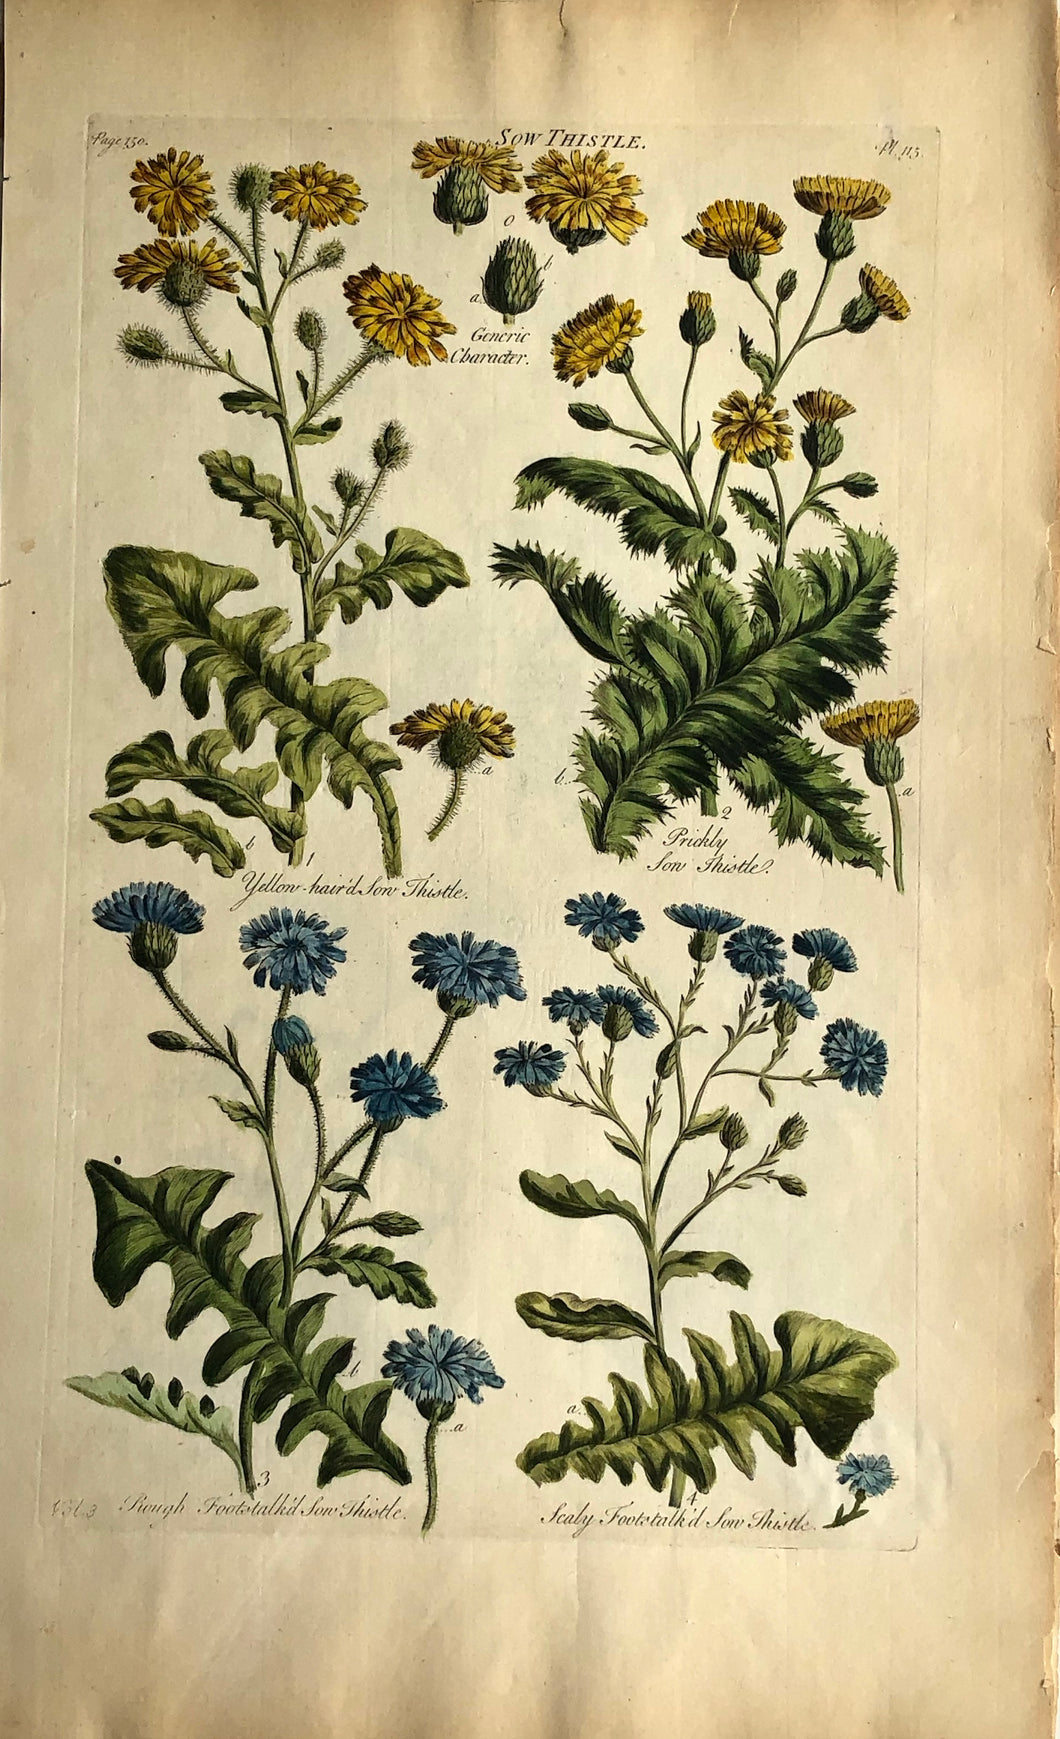 Botanical, Hill, Sir John: Sow Thistle, The Vegetable System. London: 1770-1775